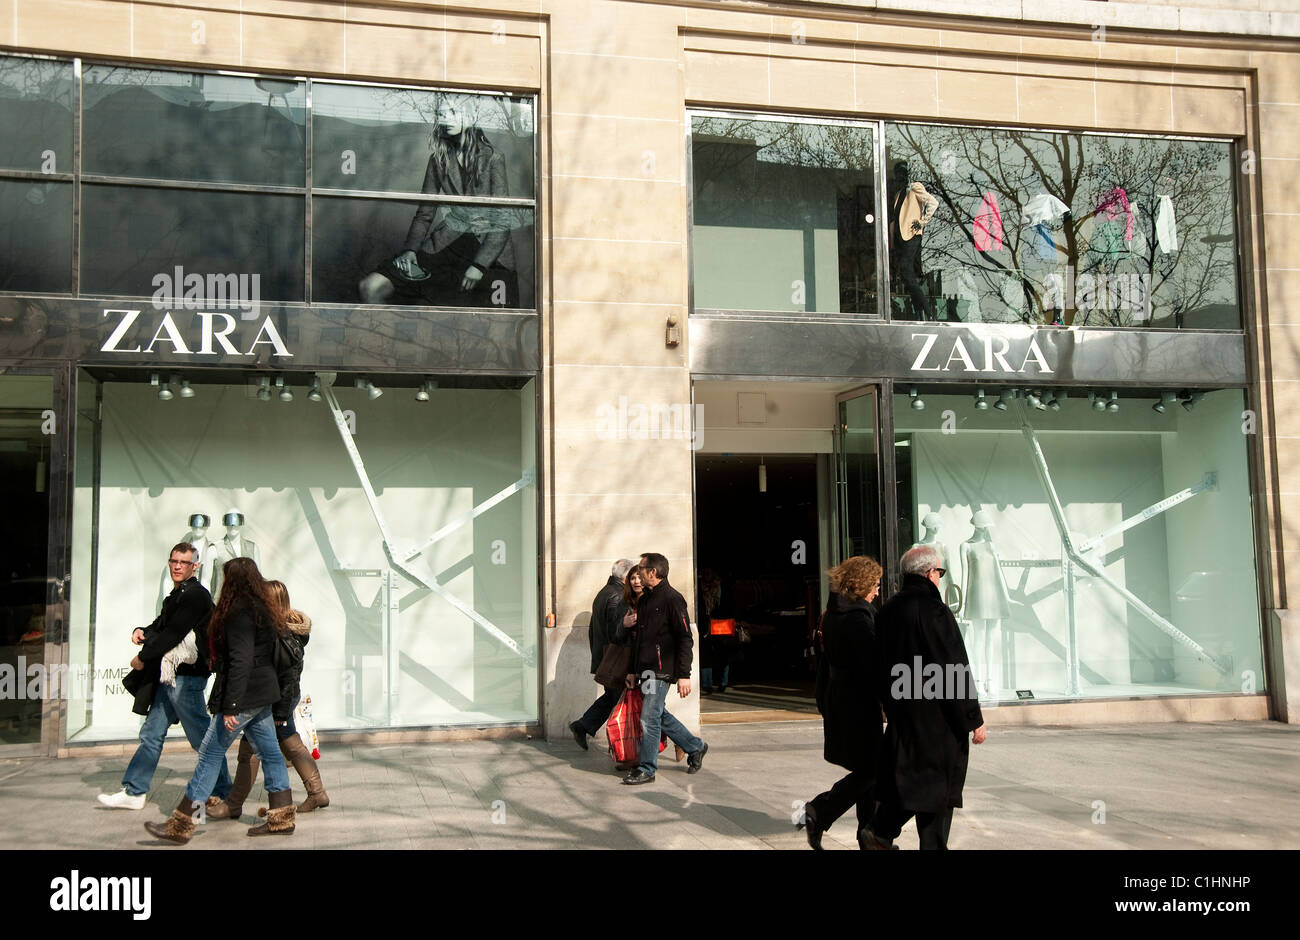 Paris, France -Zara store Stock Photo - Alamy